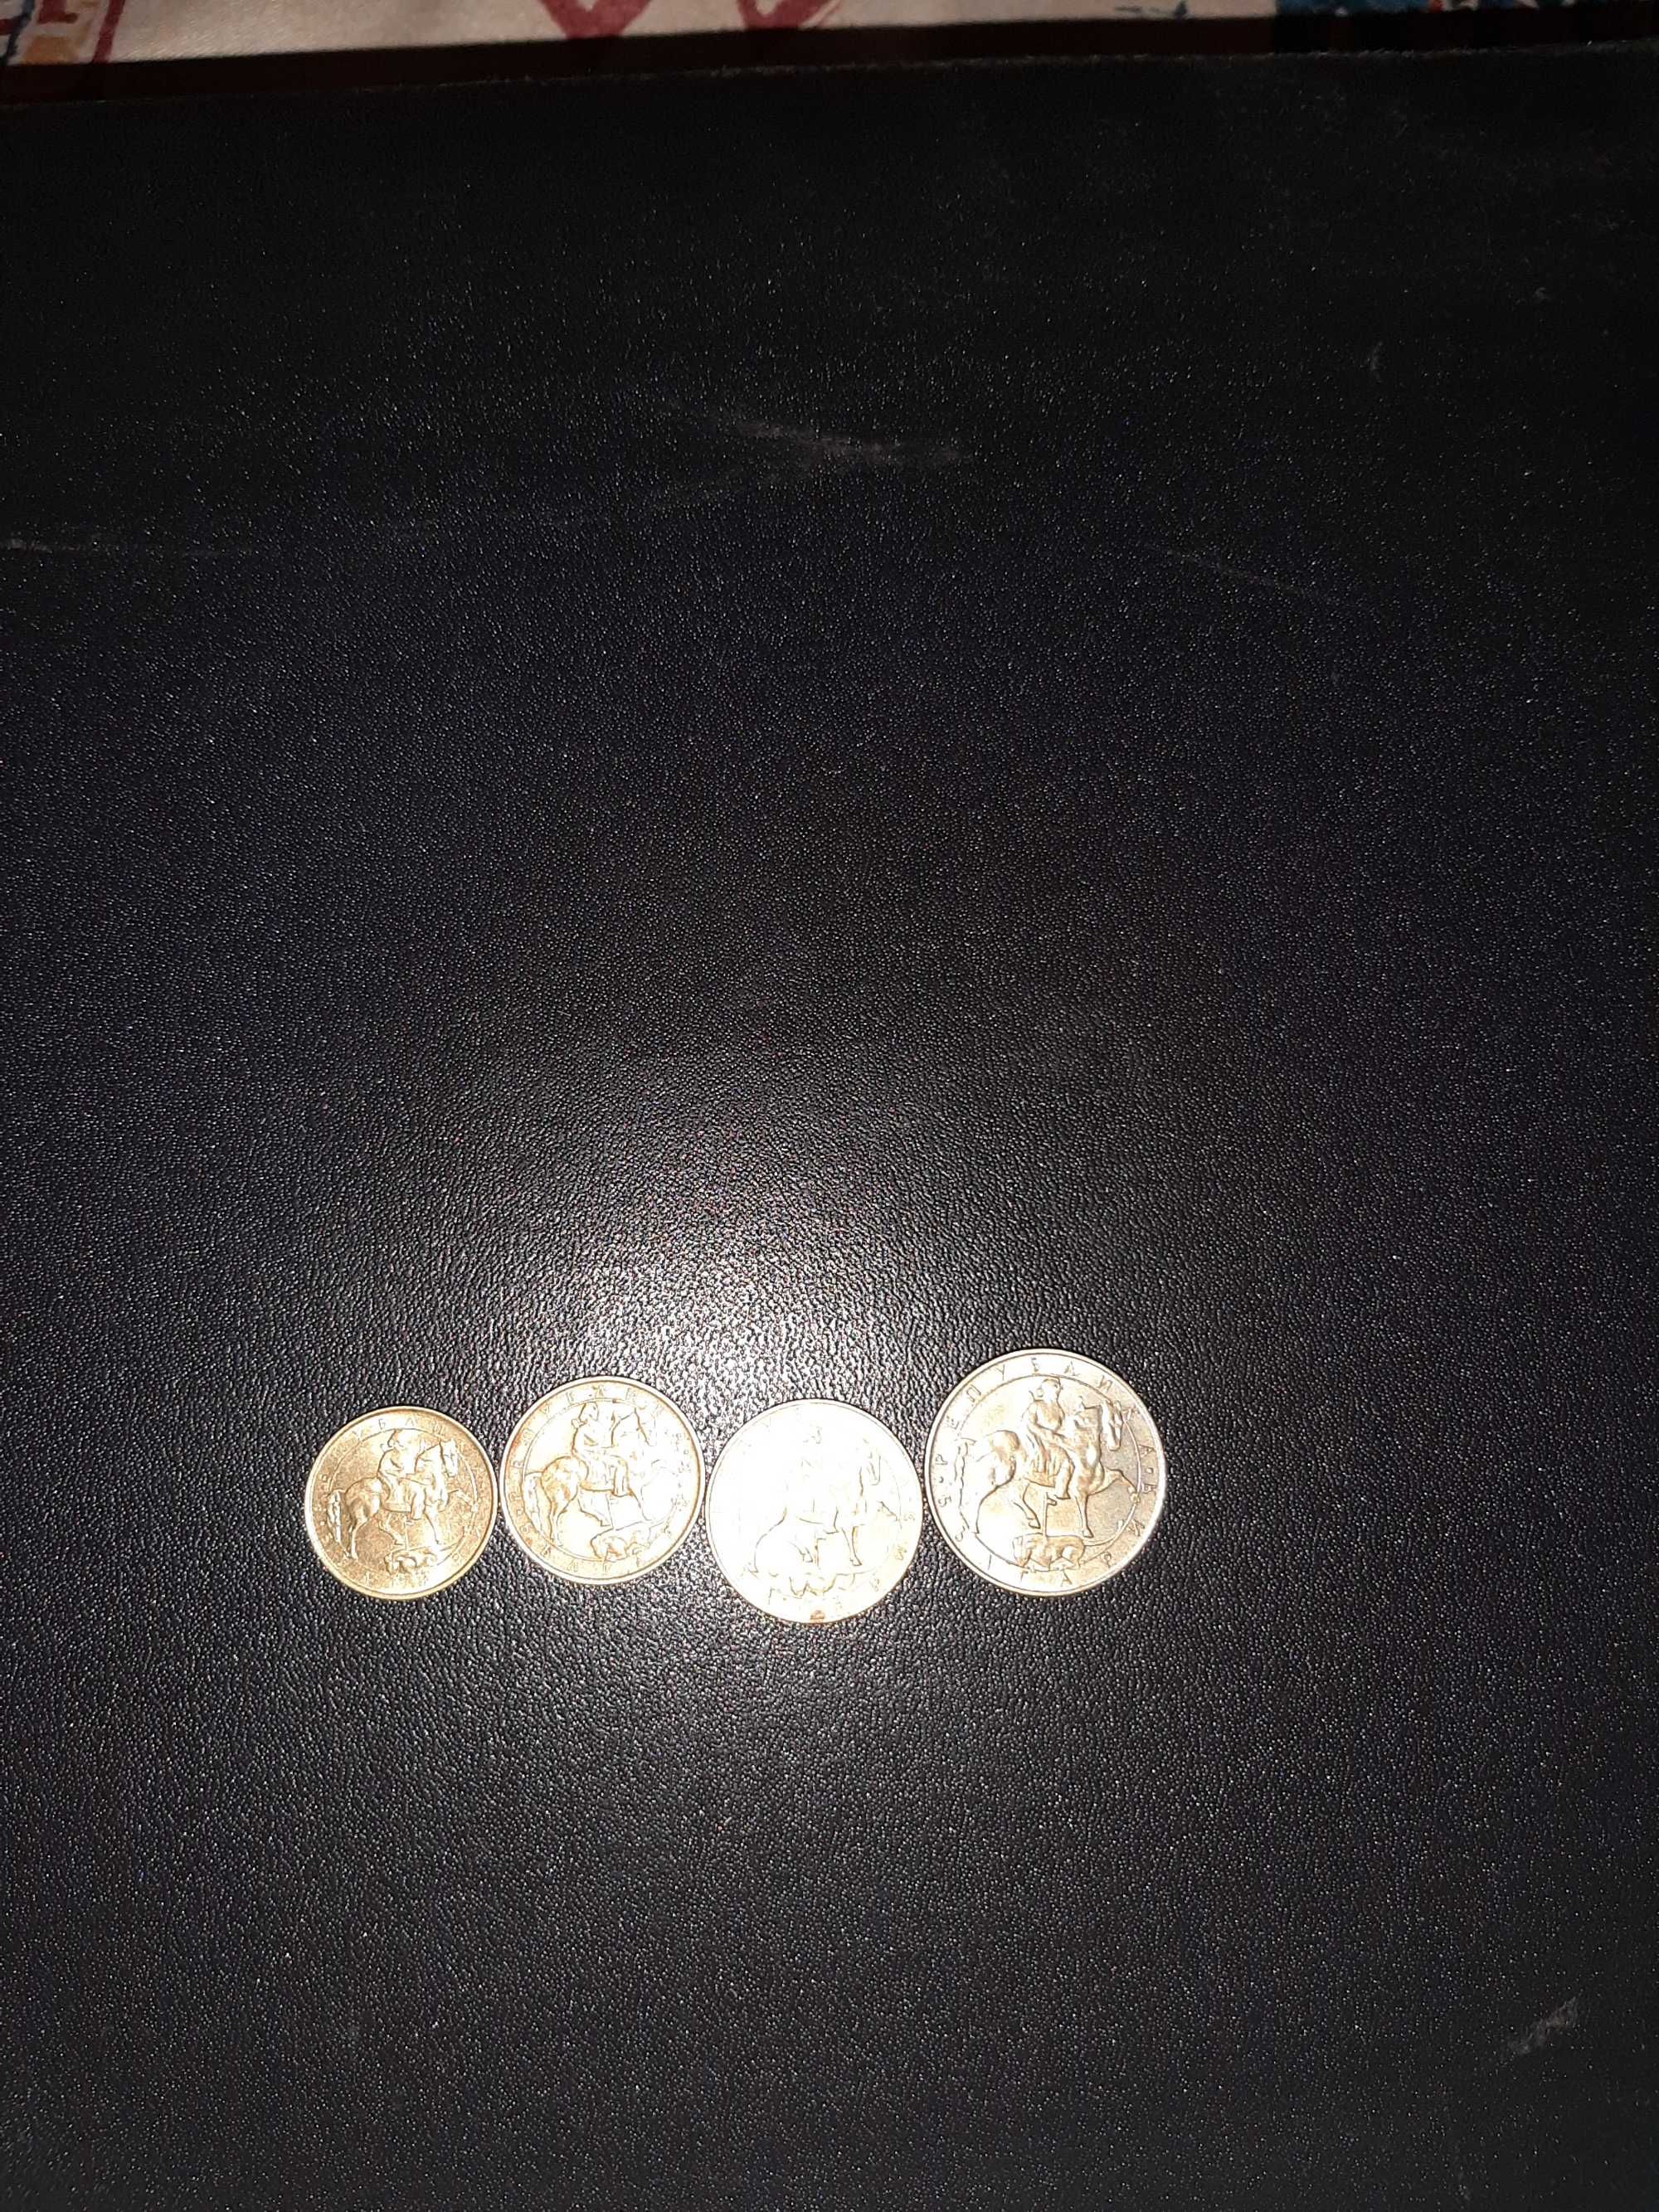 Лот монети български